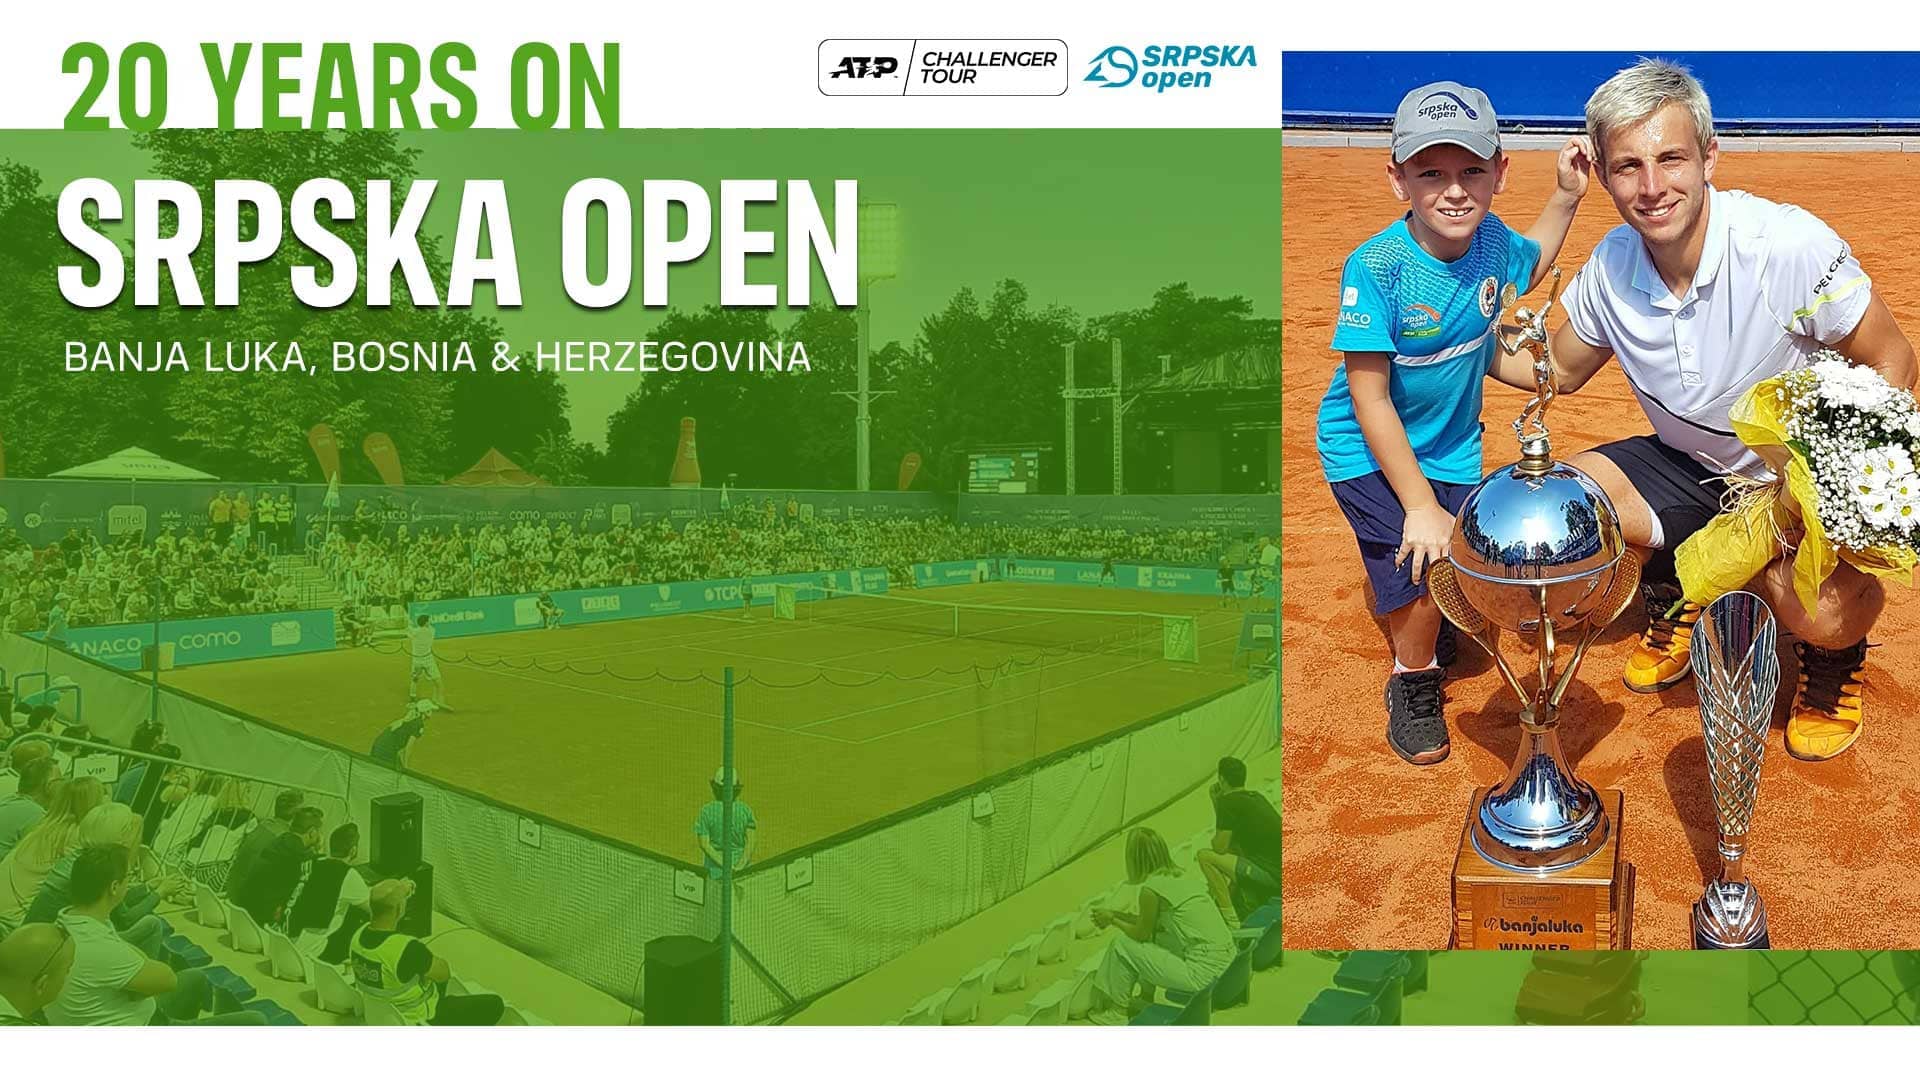 Banja Luka Celebrates 20th Anniversary On Challenger Tour ATP Tour Tennis